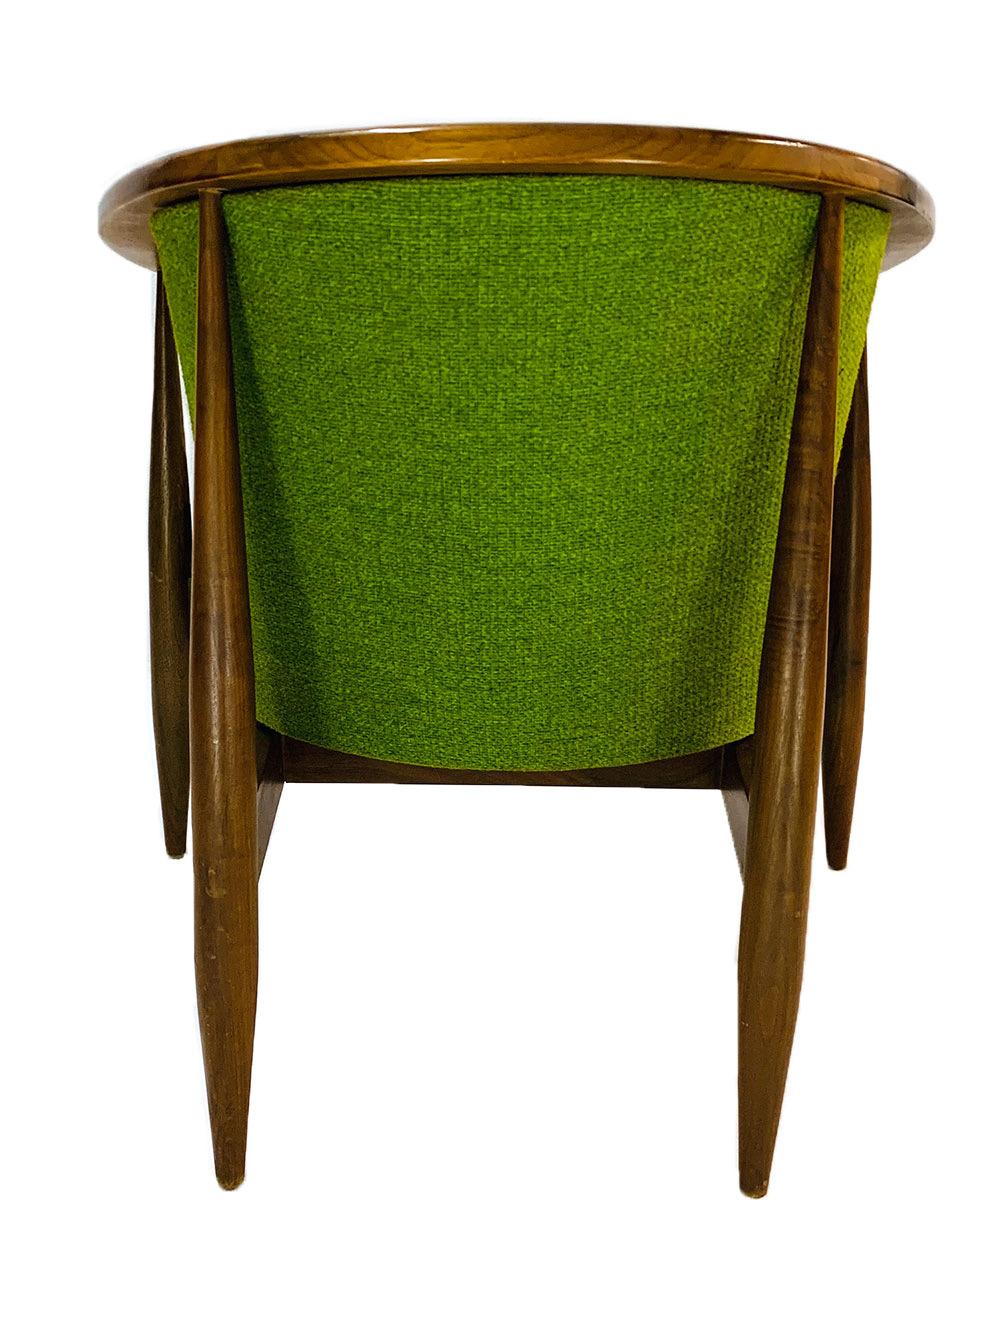 Mid-Century Modern Kodawood Barrel chair creates a barrel with its sleek minimal Kodawood frame recently reupholstered in green fabric.